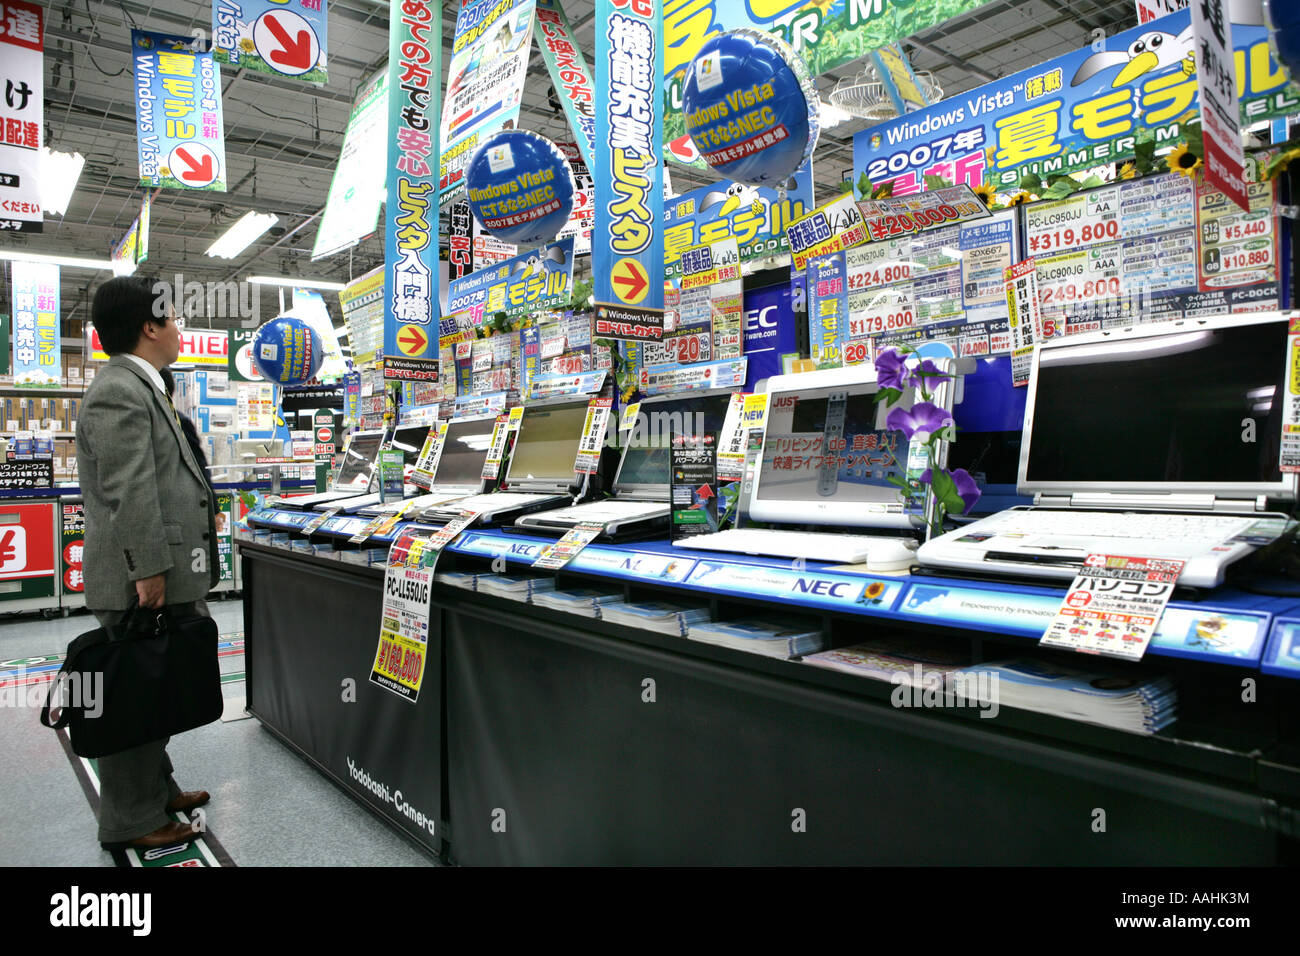 JPN Japan Tokyo Electronic store computer mobile phones music hardware tv screens cameras Stock Photo